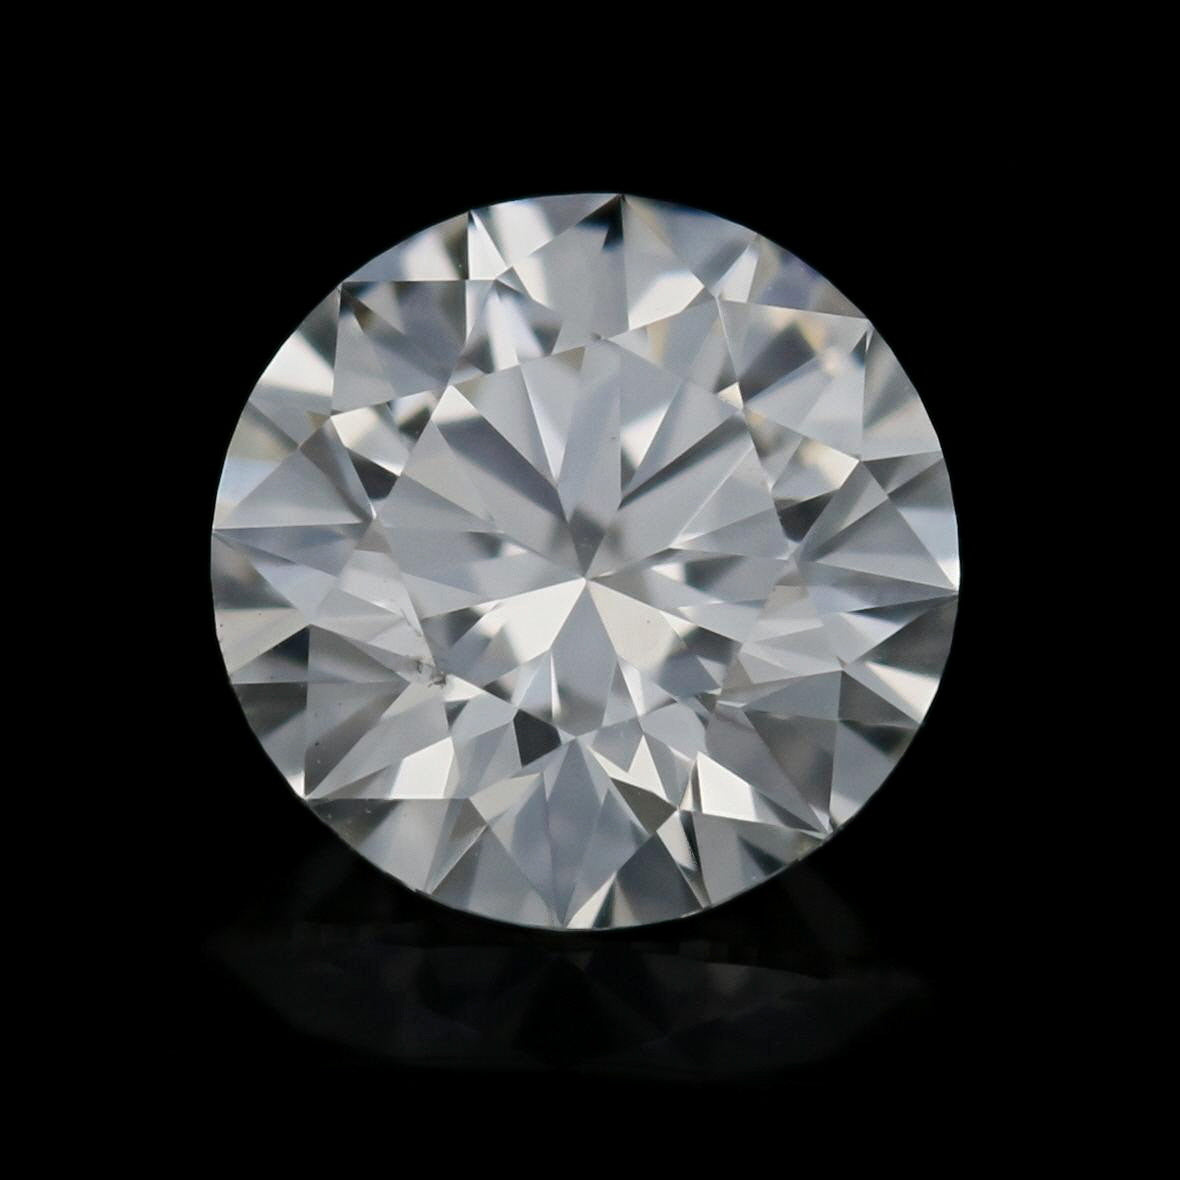 .74ct Loose Diamond Round Brilliant GIA